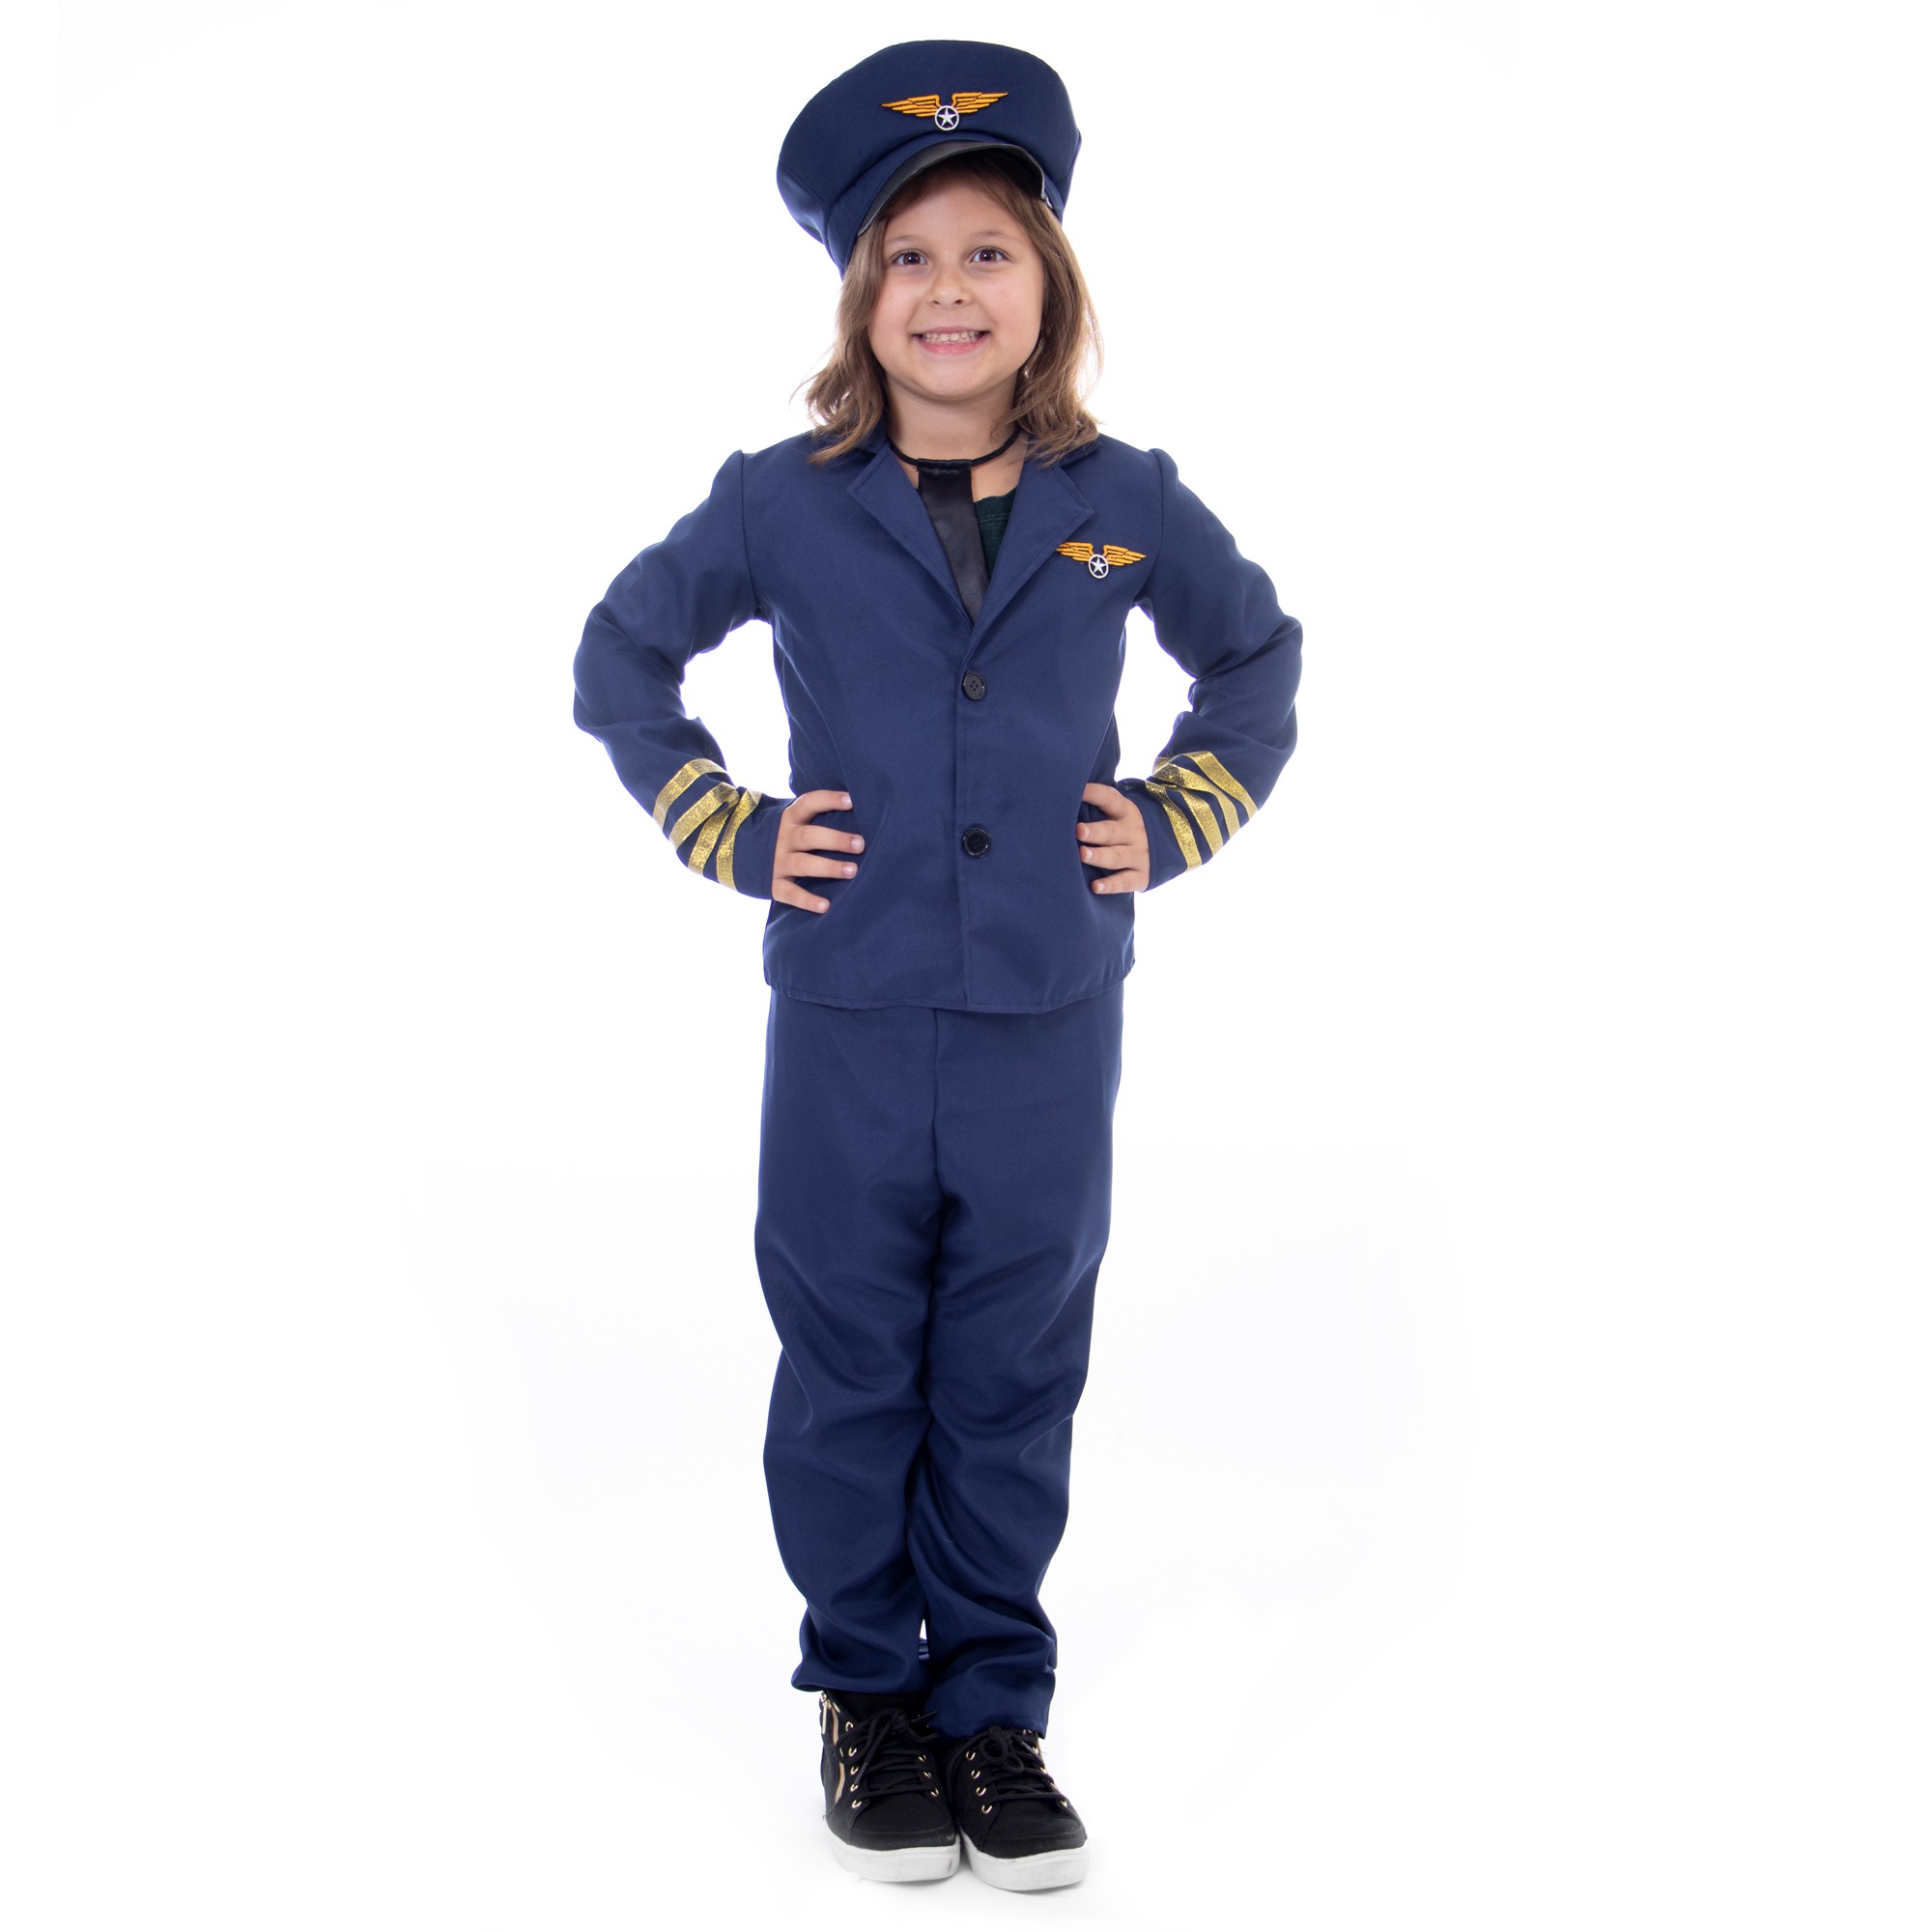 Airline Pilot Halloween Costume - Kids Unisex, Medium